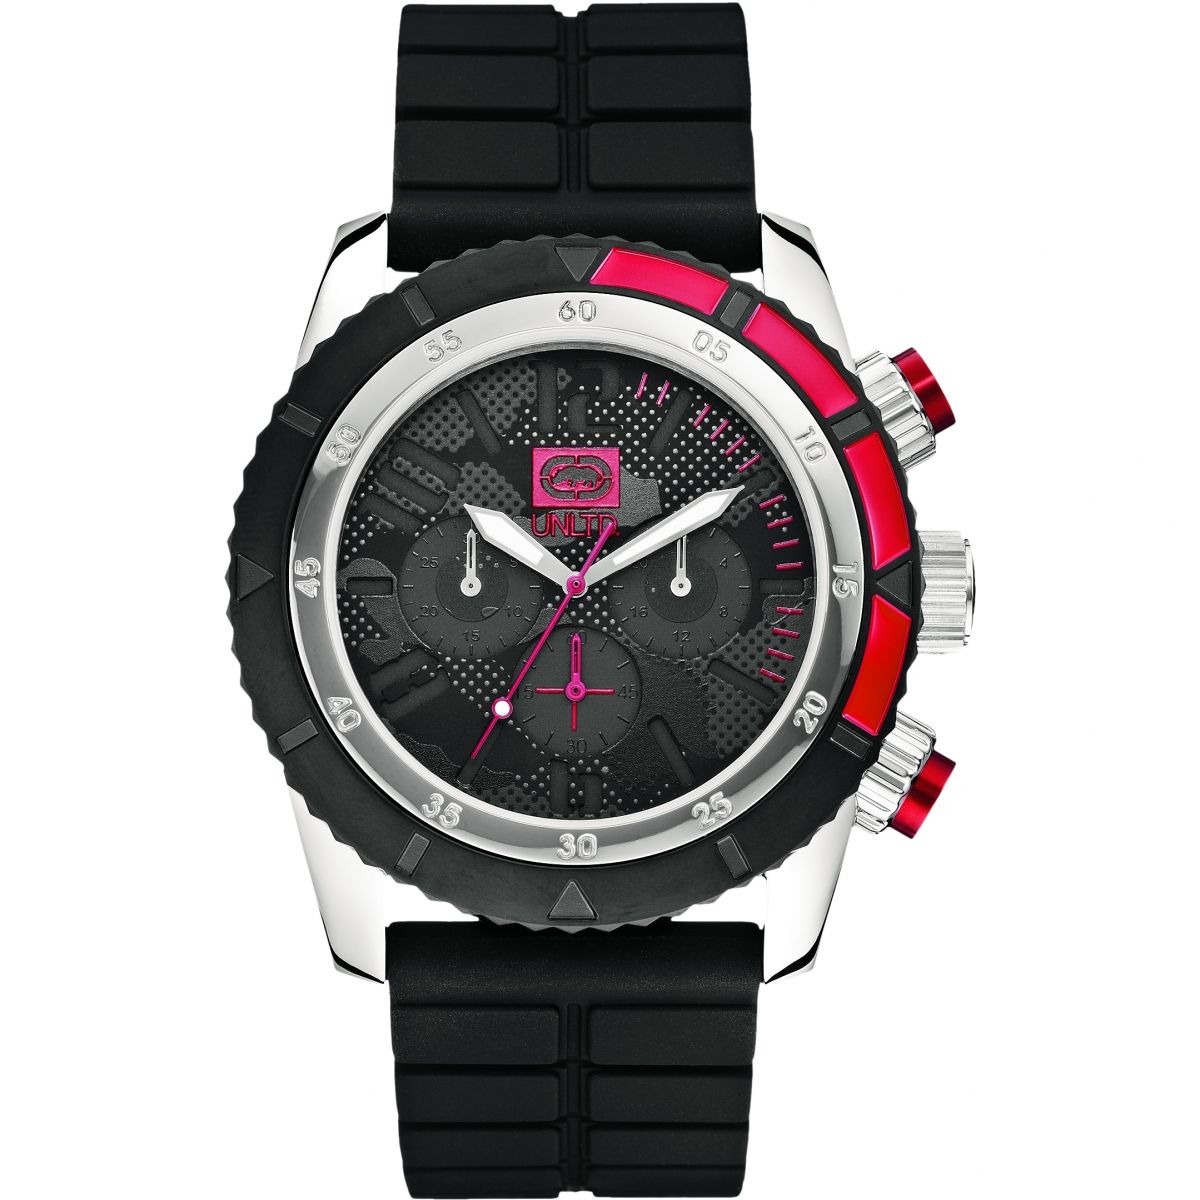 Unltd - Gent Chronograph Watch in Black at Watch Shop GOOFASH